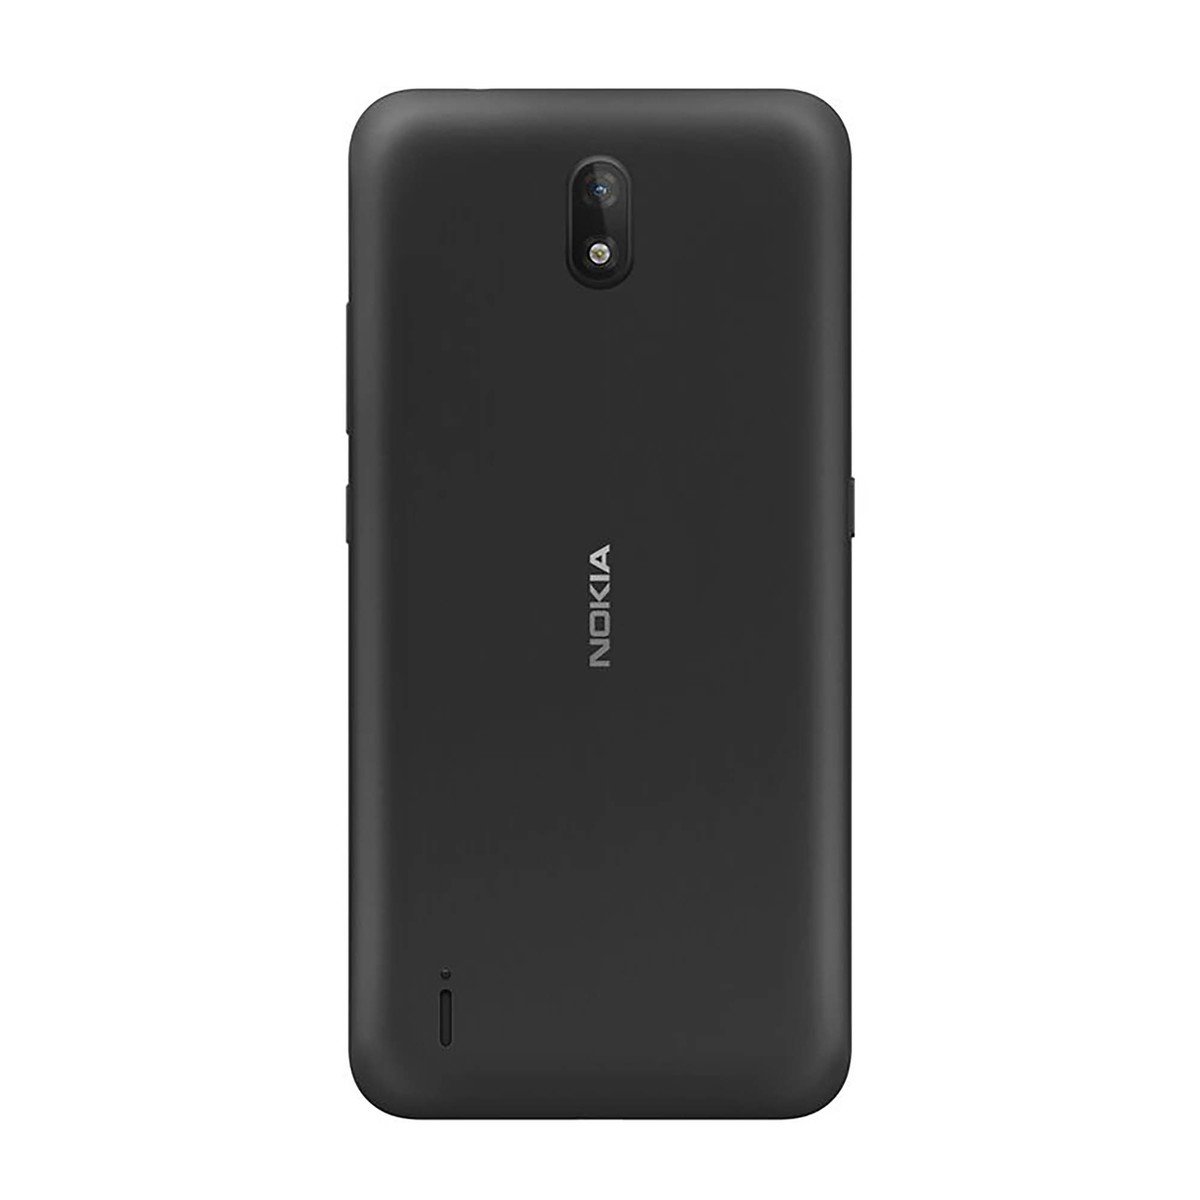 Nokia C2 16GB Charcoal